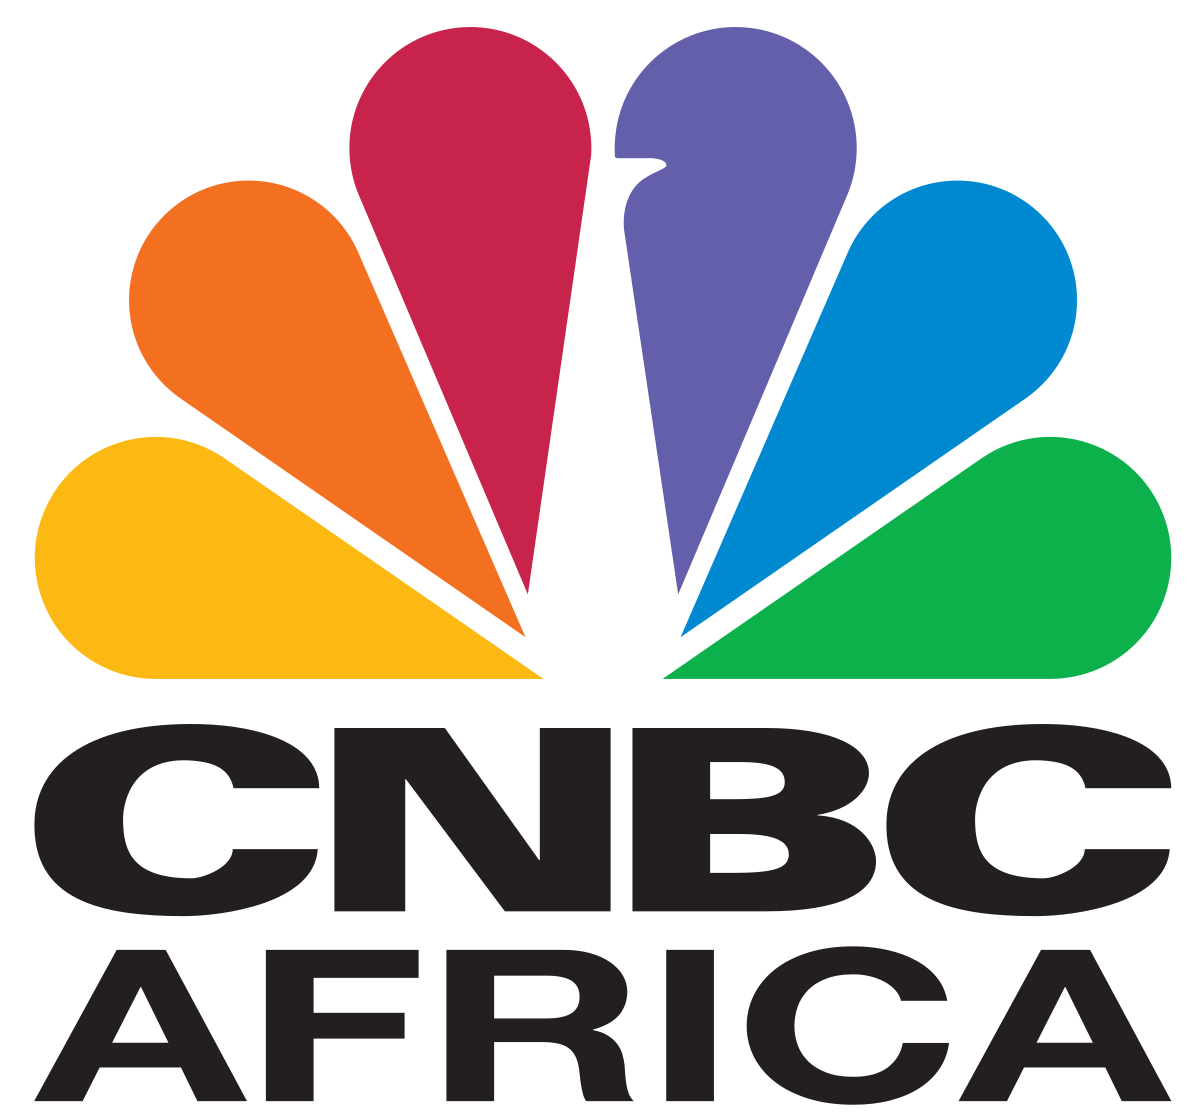 1200px-CNBC_Africa.svg